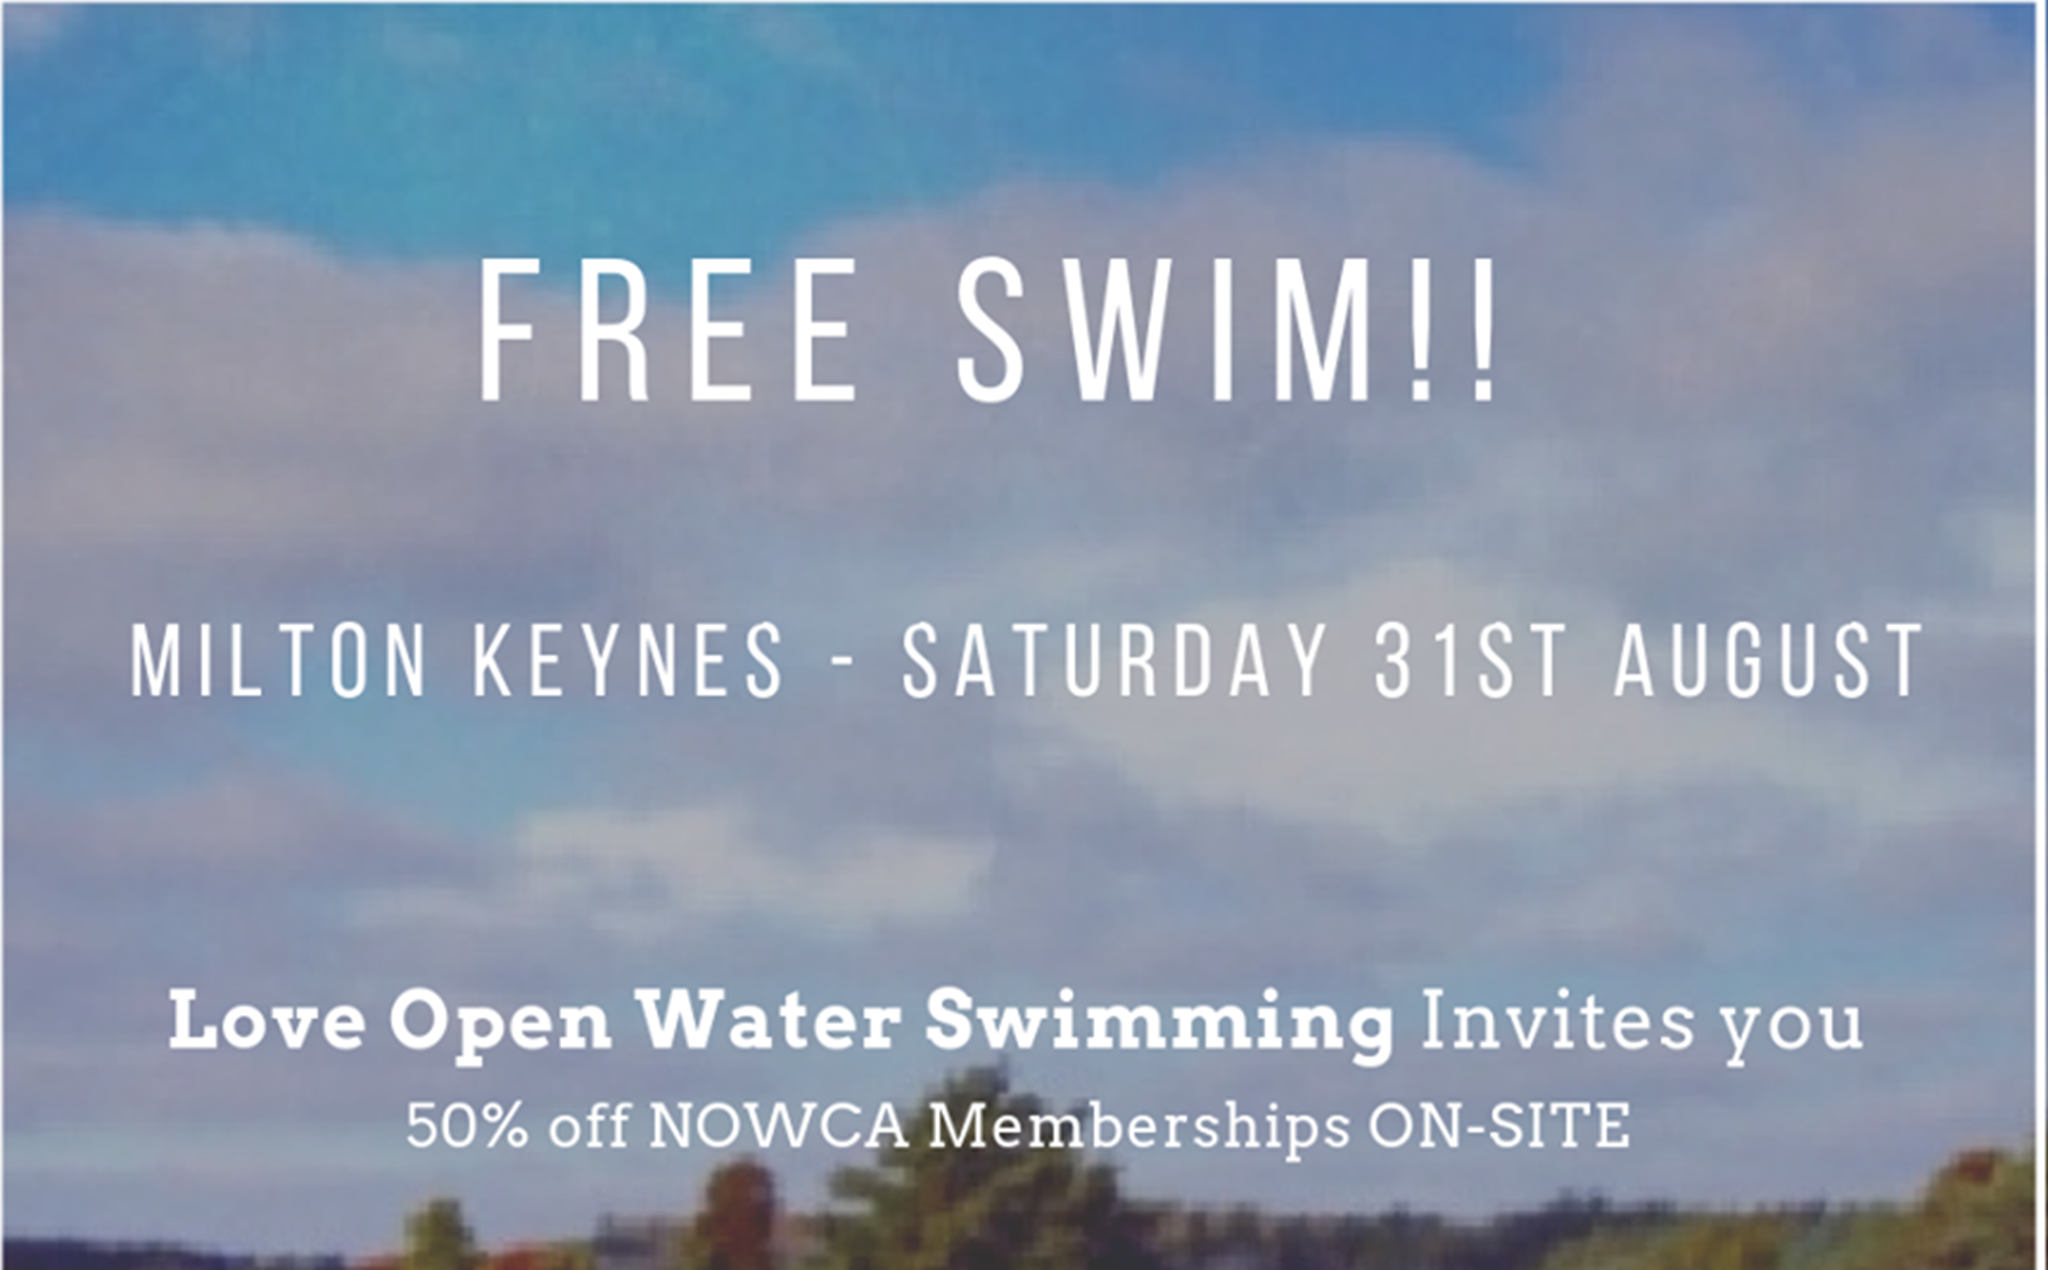 Free swim and half price membership offer MK - banner2.png